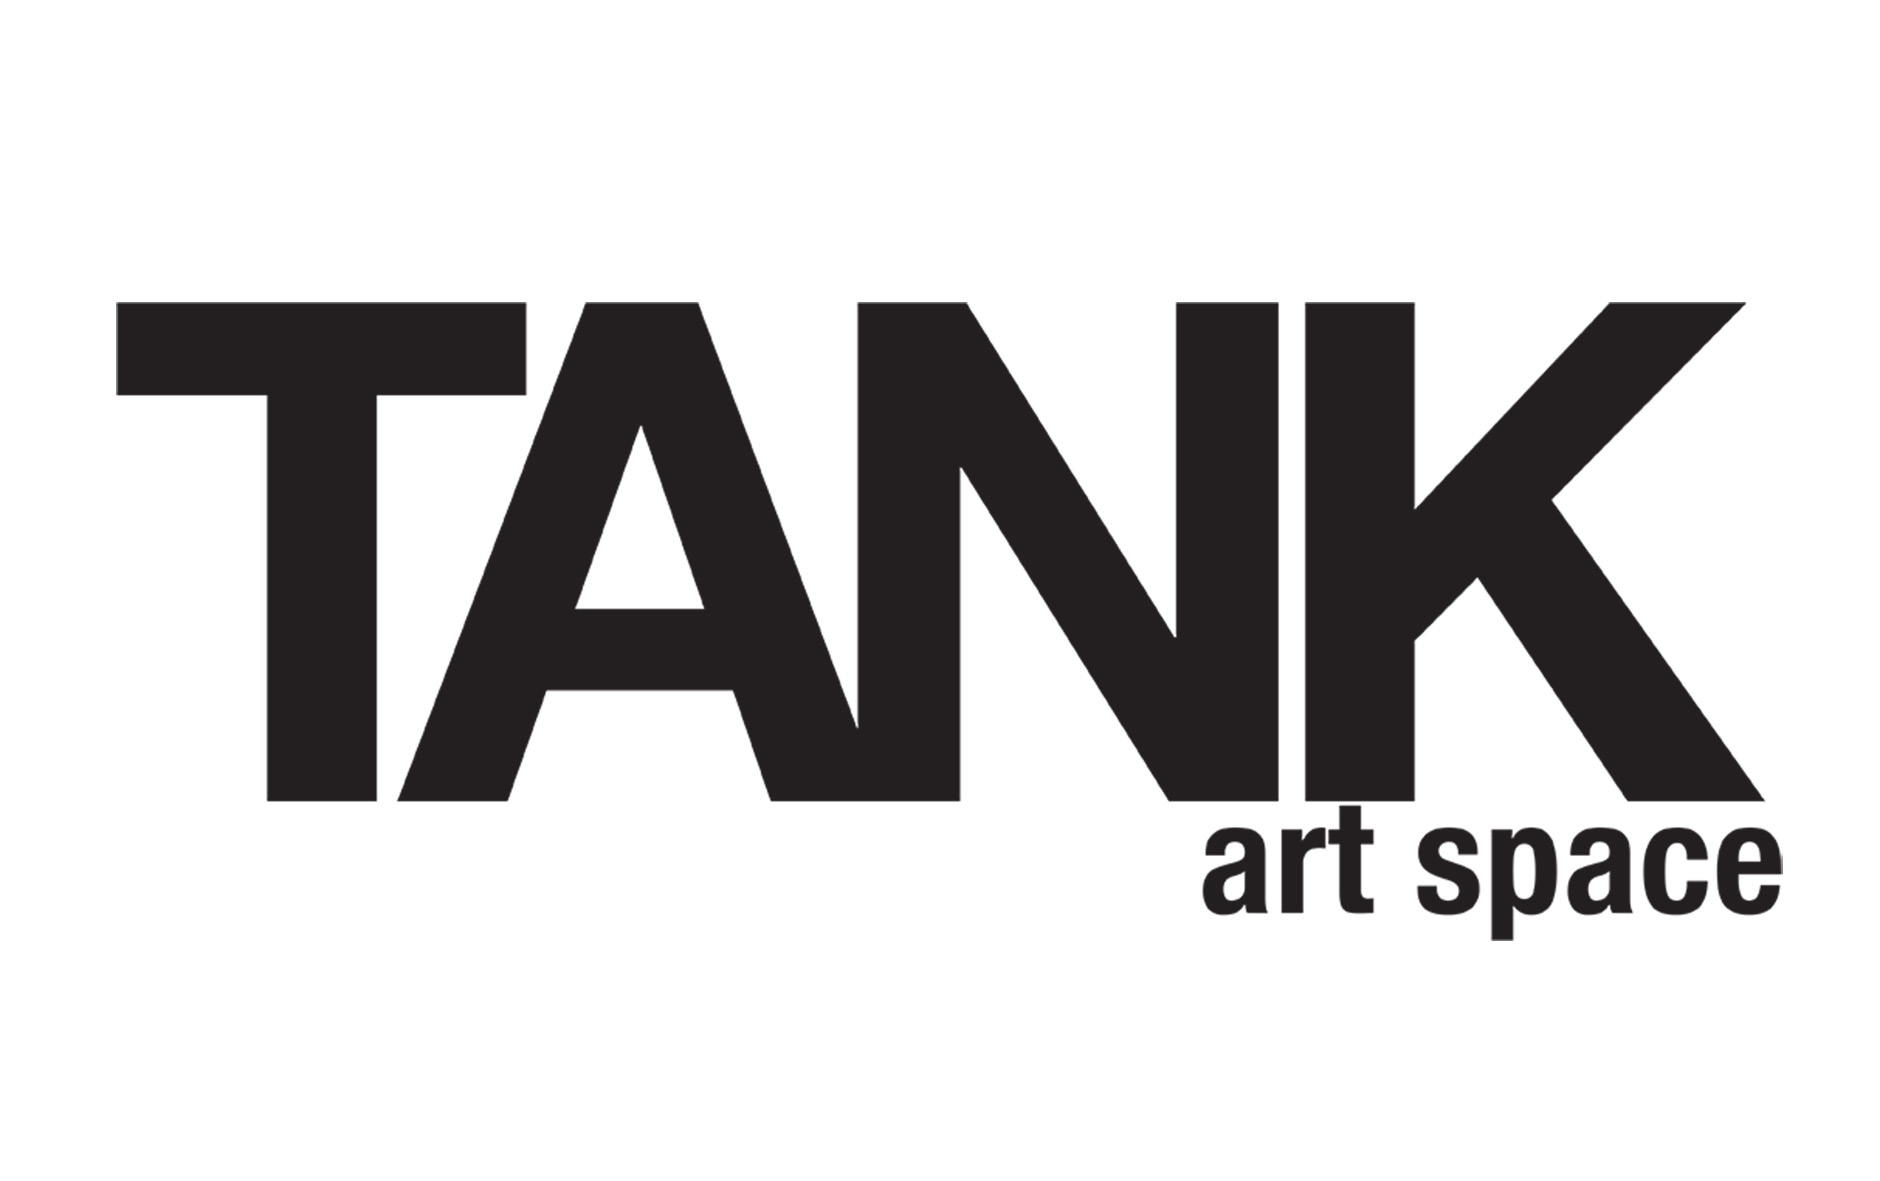 logo-tank